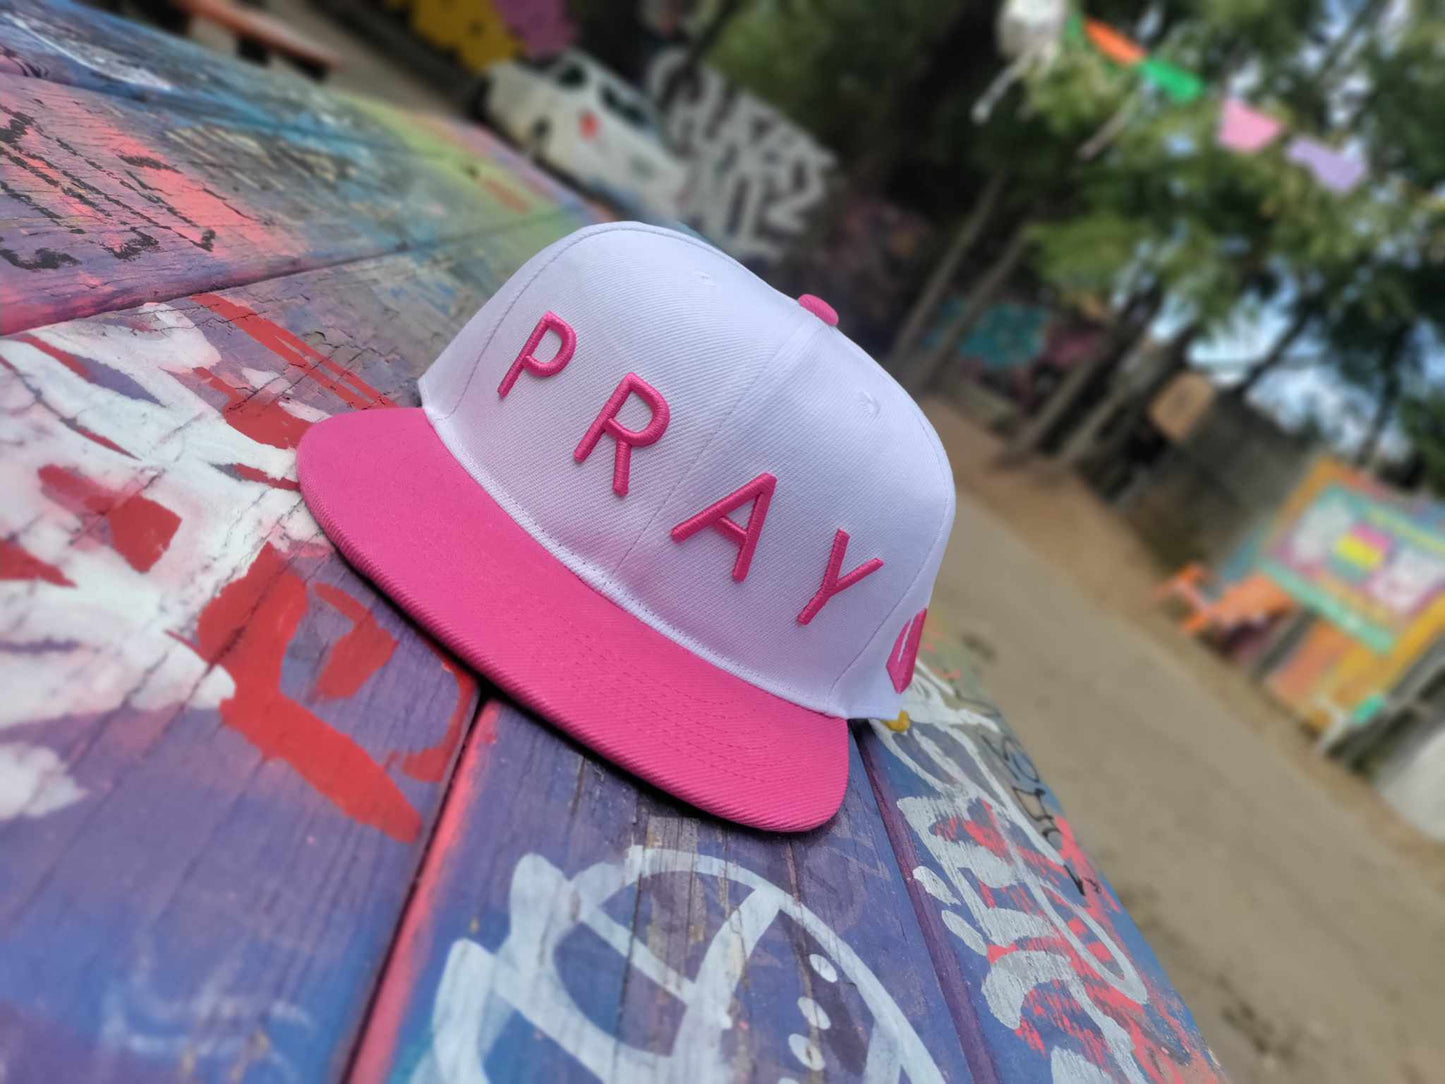 PRAY- Rose Pink and White Snapback